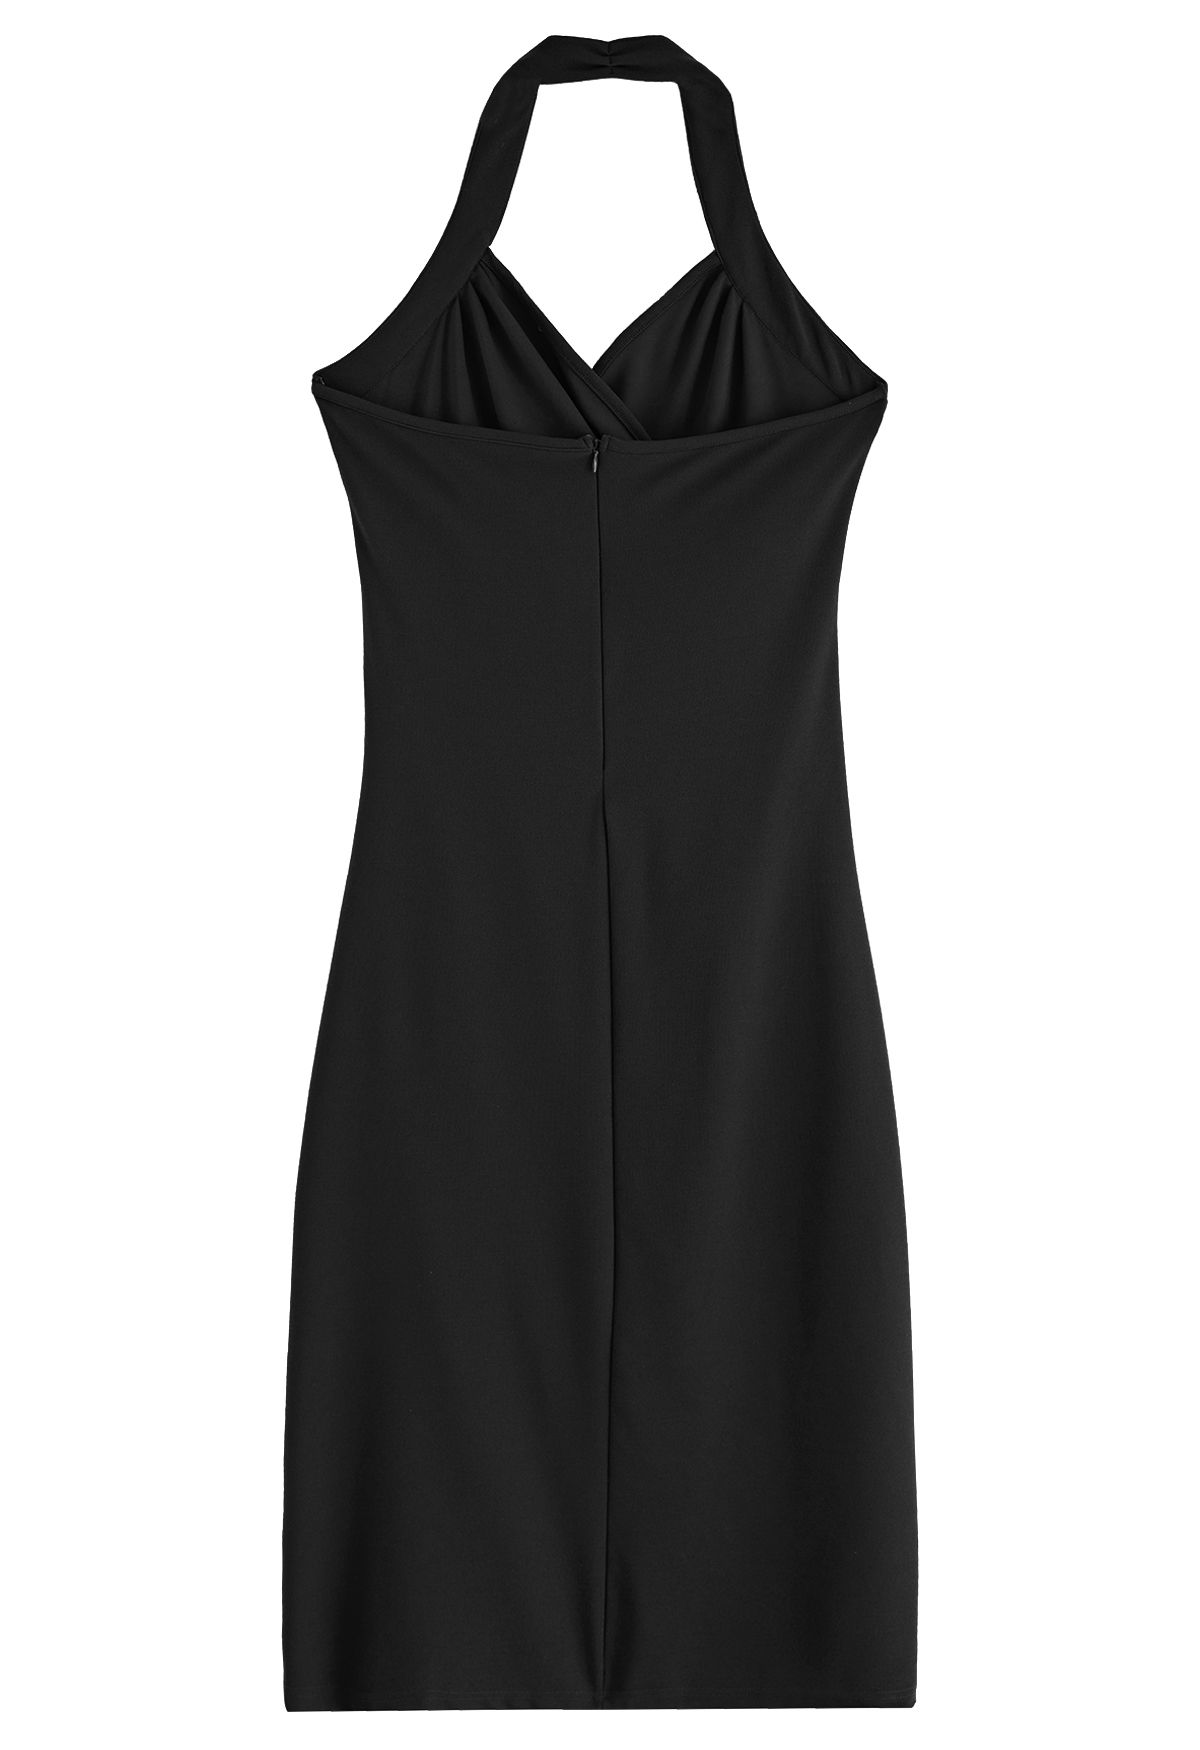 Halter Neck Wrap Bust Dress in Black - Retro, Indie and Unique Fashion